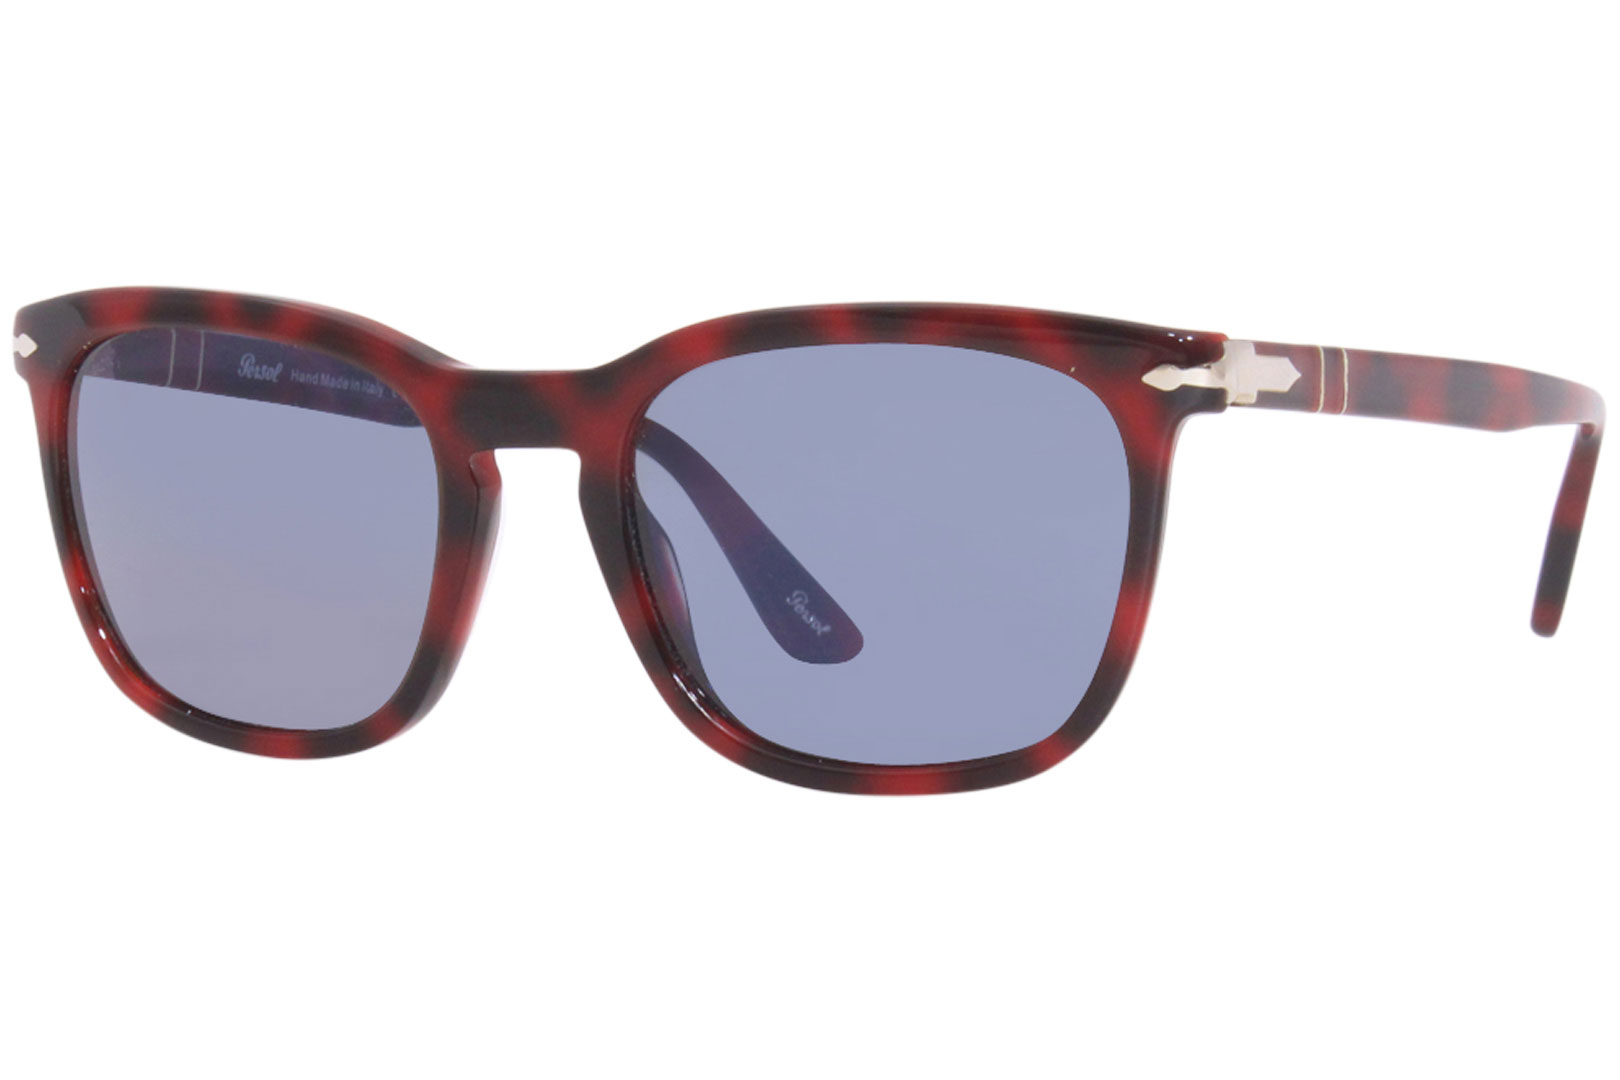 Dolce & Gabbana - Dolce&Gabbana x Persol Sunglasses - Transparent Pink -  Dolce & Gabbana Eyewear - Avvenice